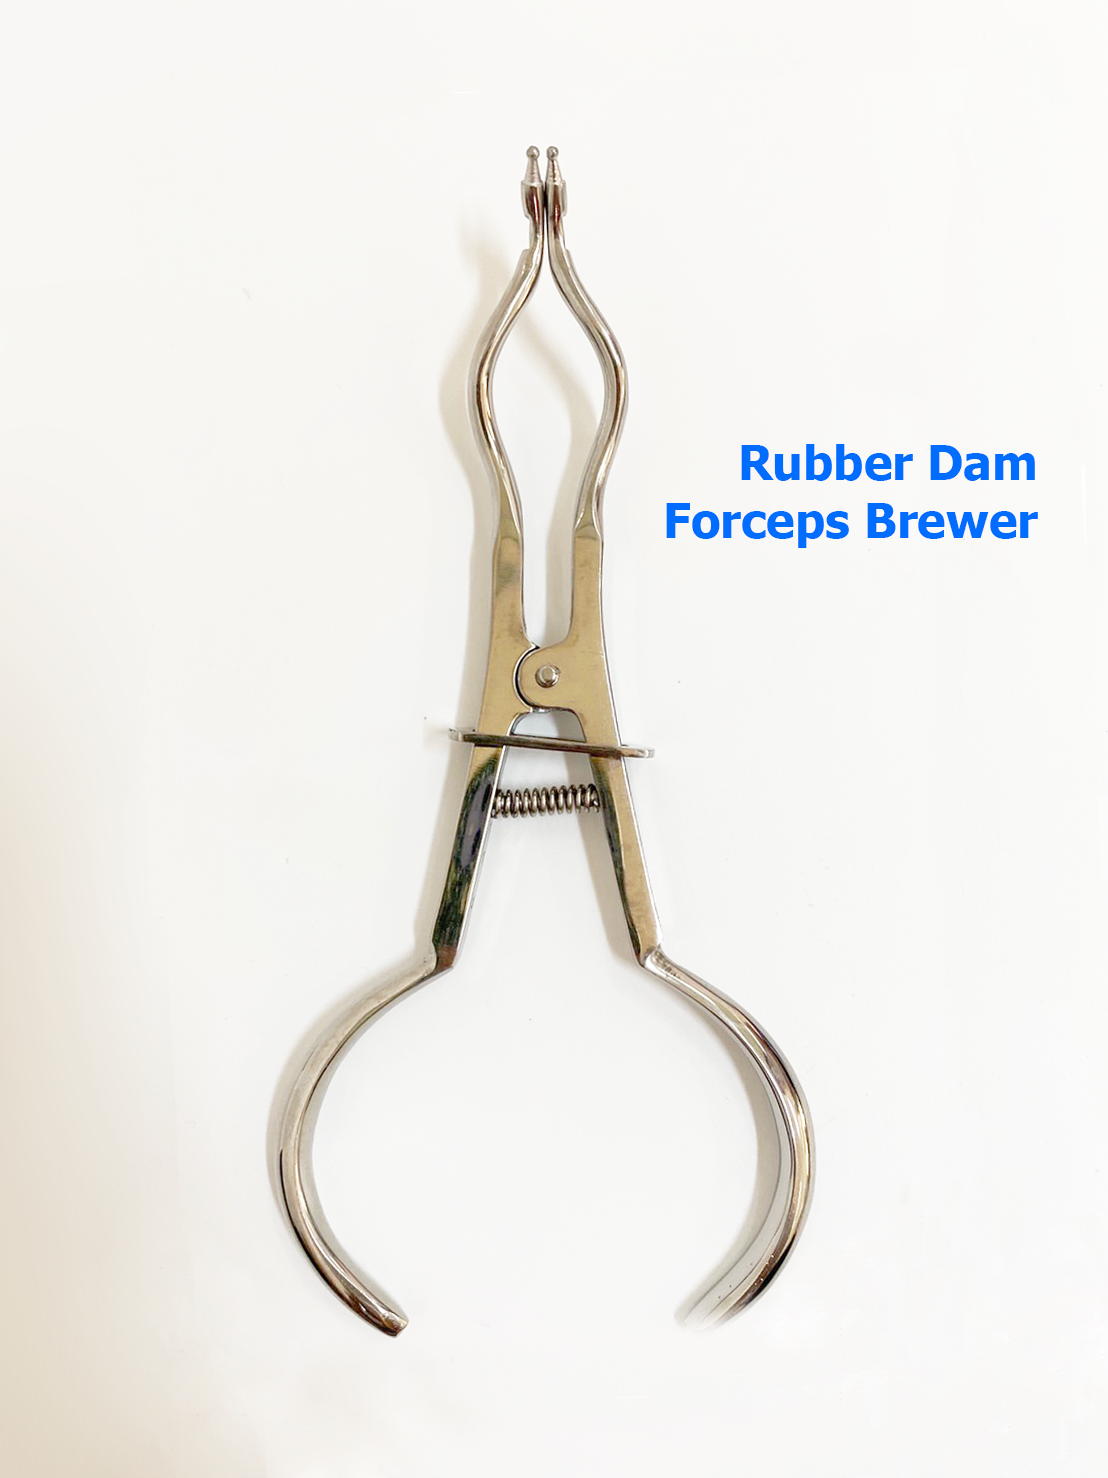 Rubber Dam Forceps Brewer